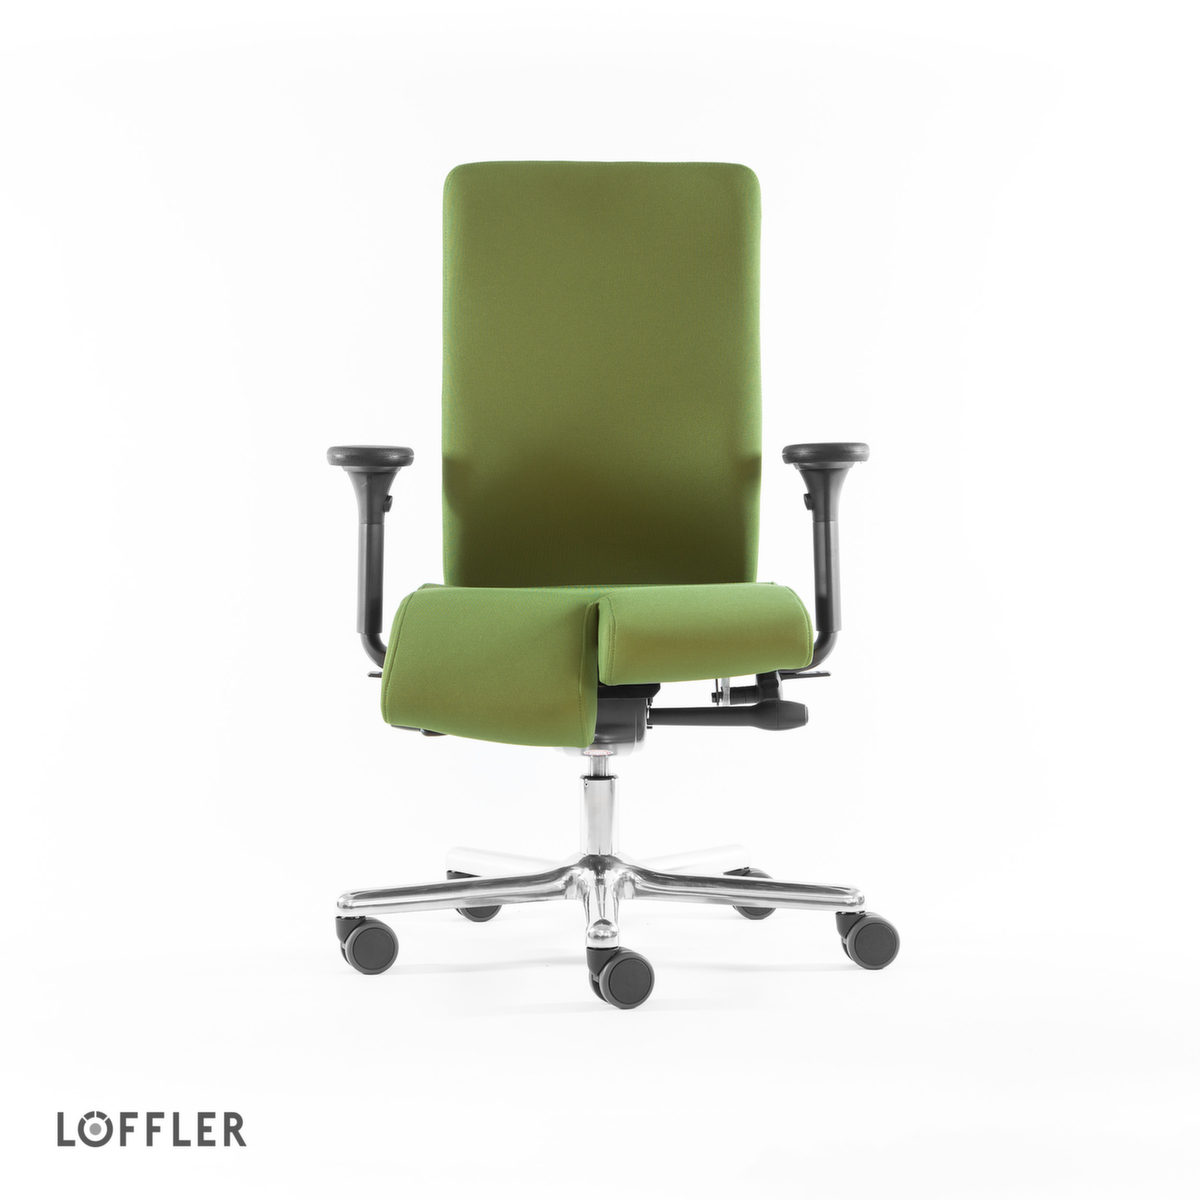 Löffler Bürodrehstuhl mit Arthrodesensitz, grün Standard 3 ZOOM